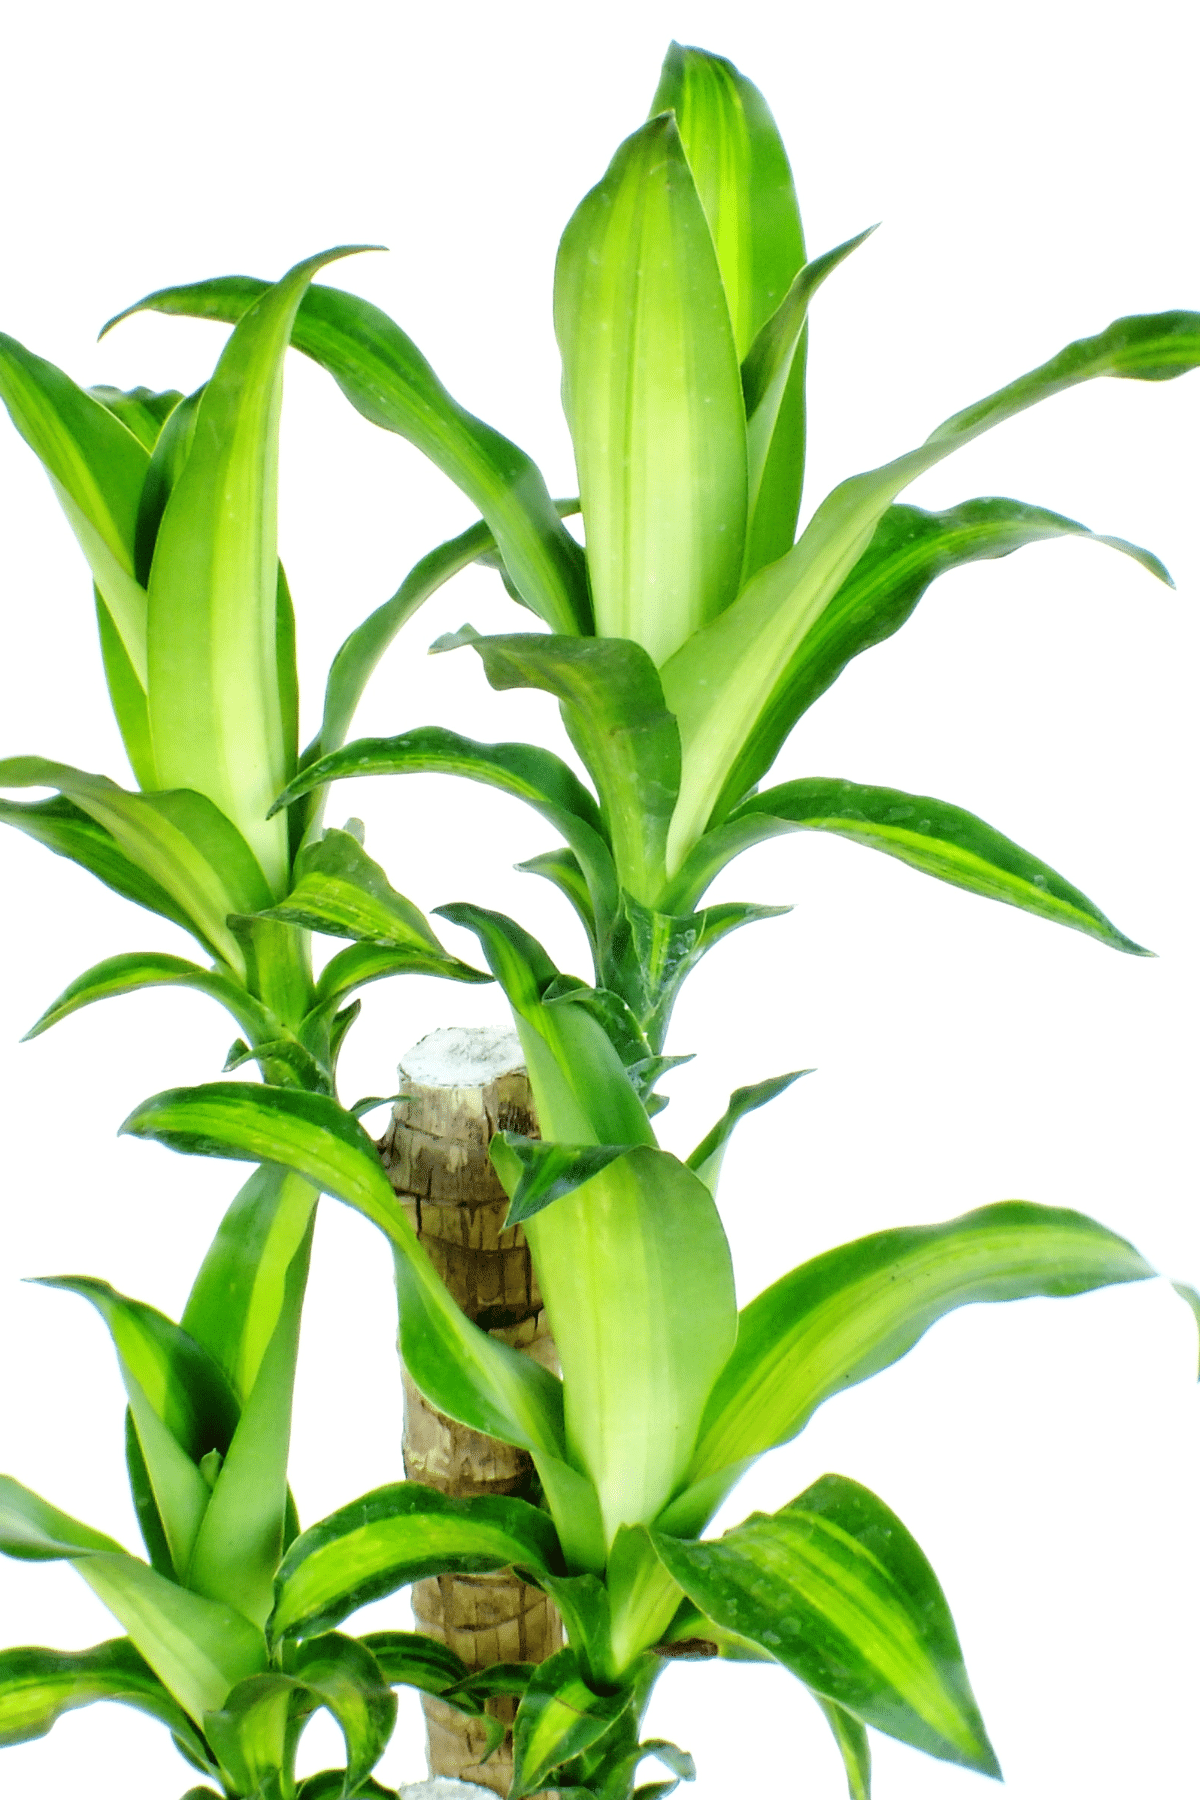 Close-up view of Corn Plant (Dracaena fragrans).